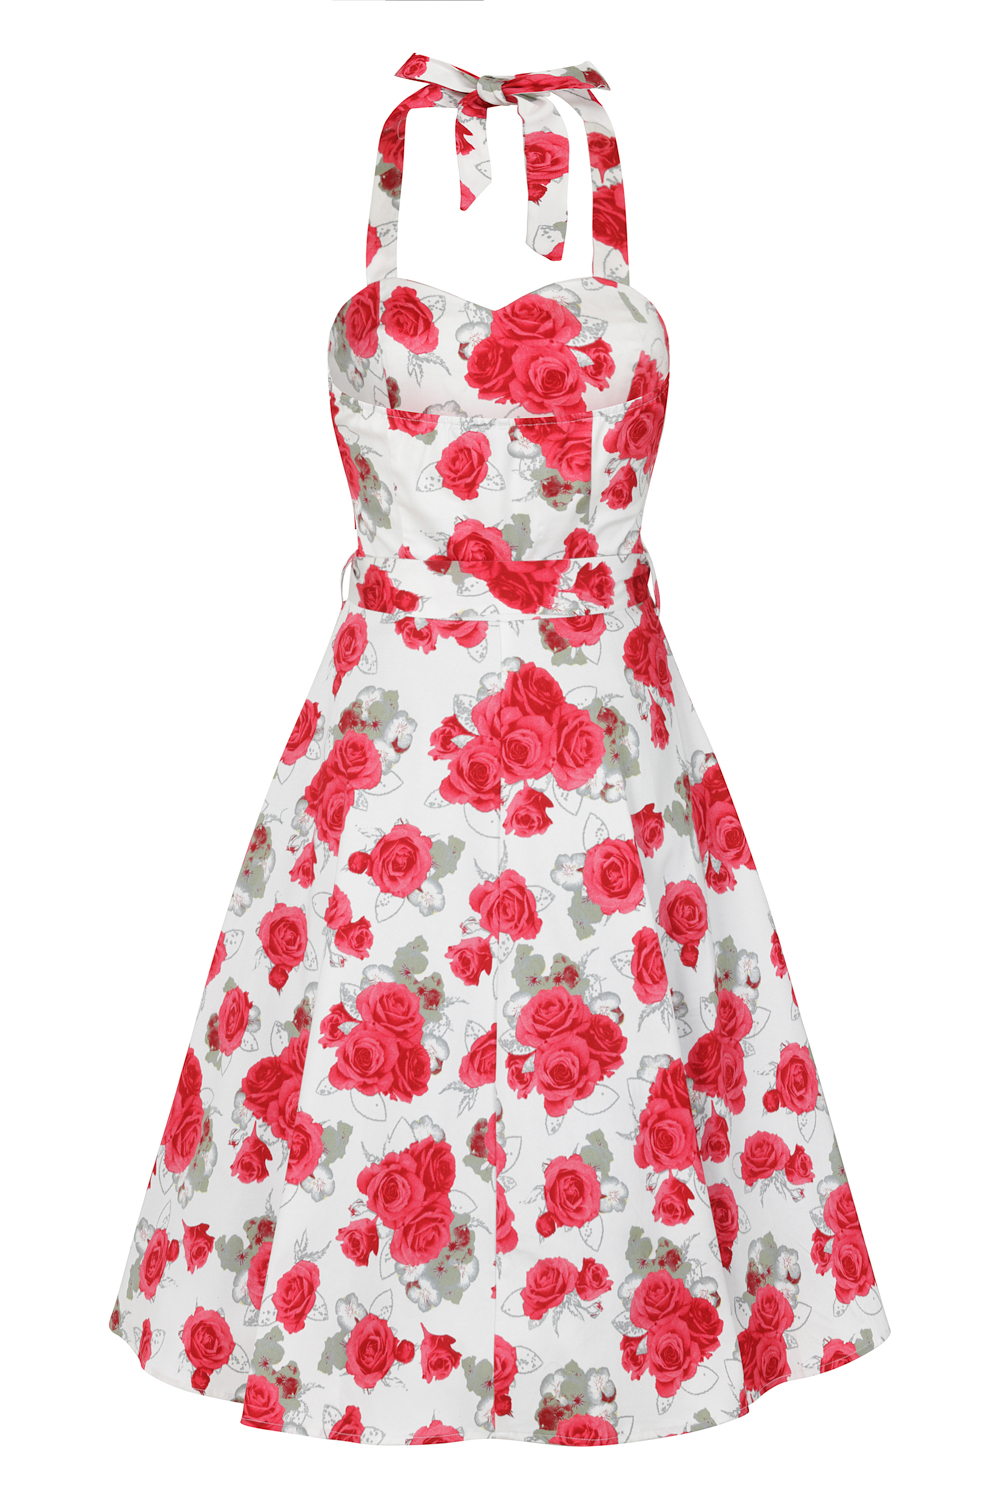 Vanessa Rose Halter Swing Dress in Red/White - Hearts & Roses London